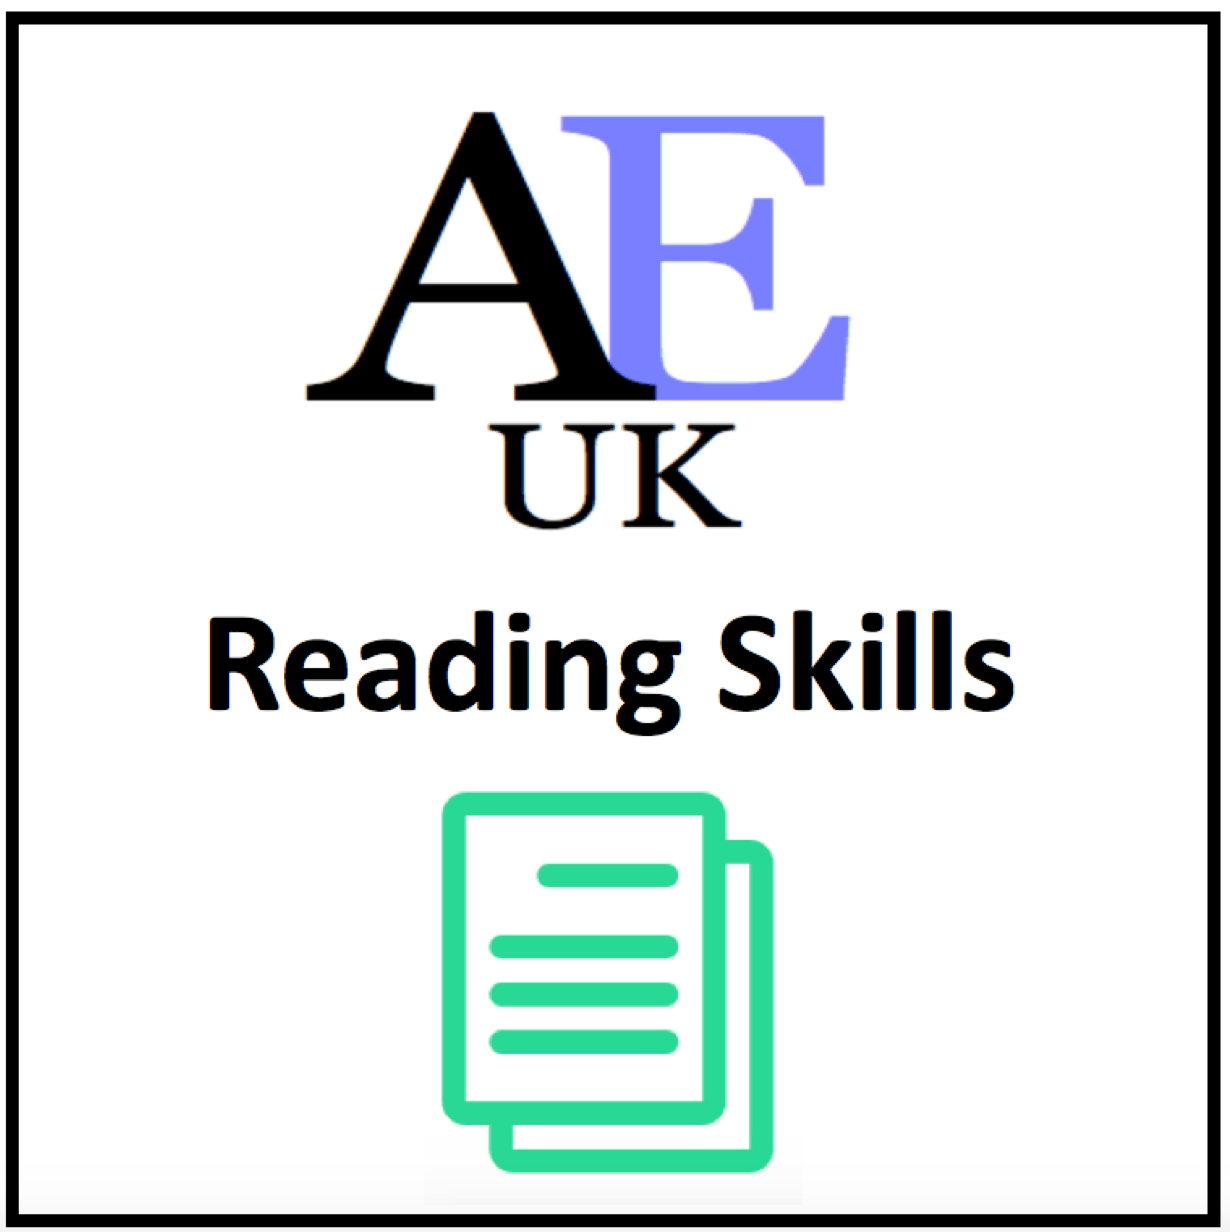 Reading Skills by AEUK